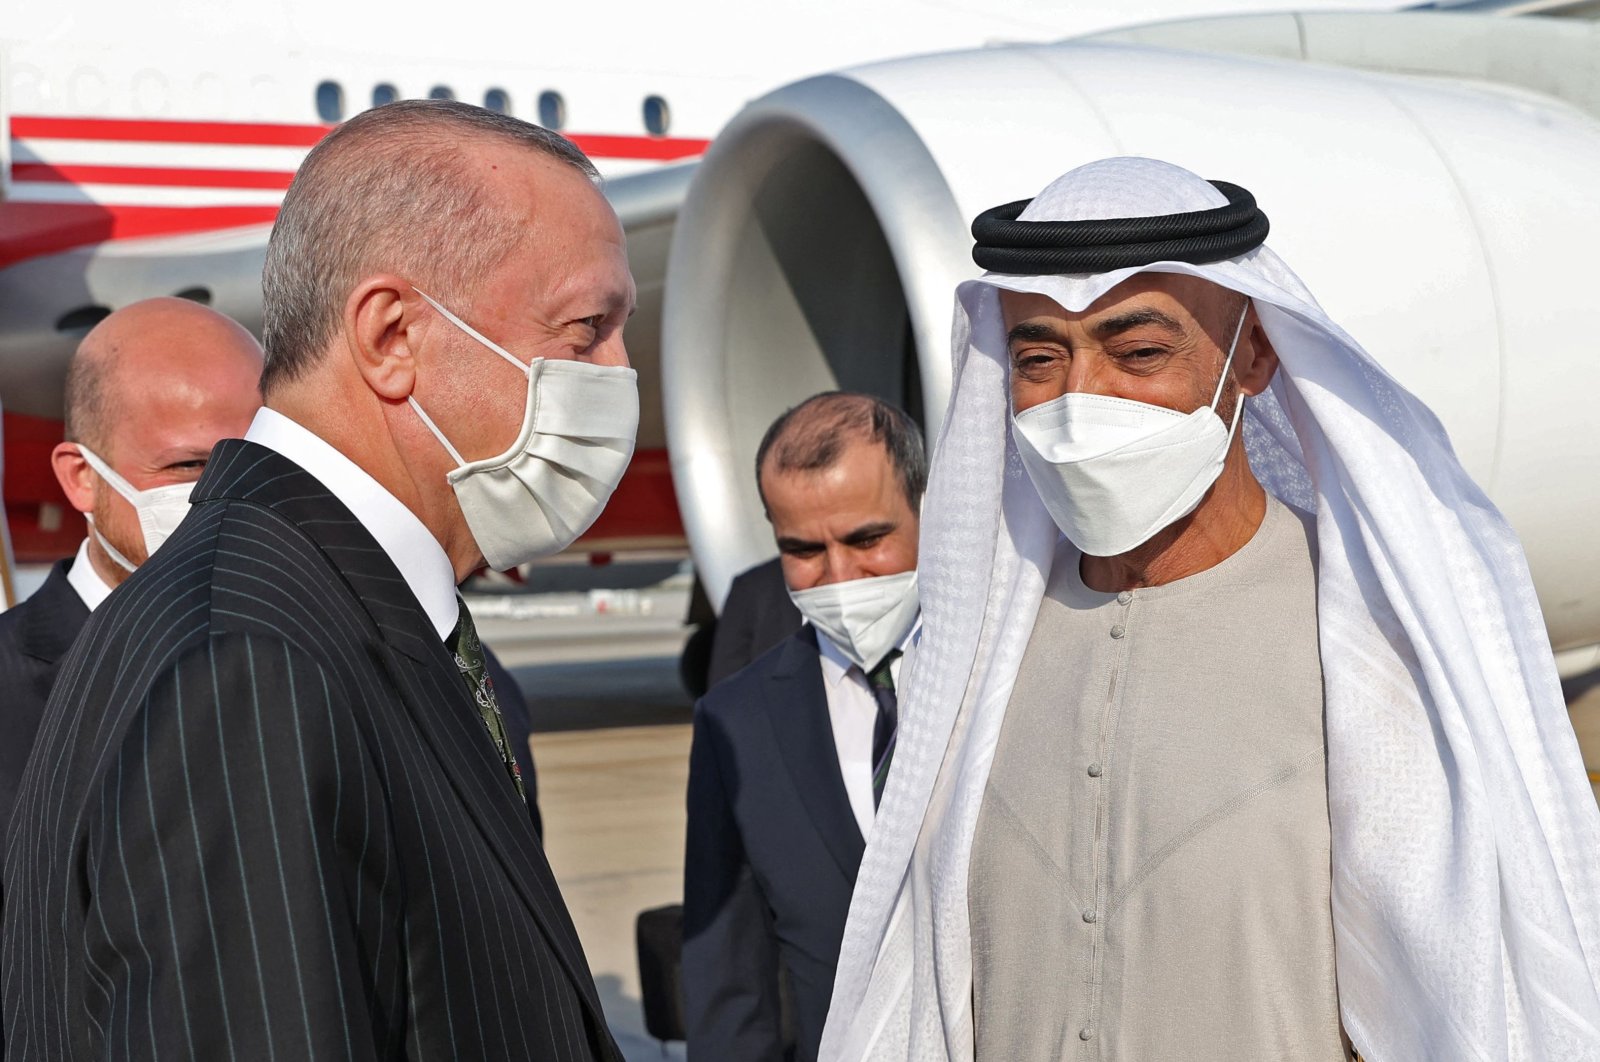 President Recep Tayyip Erdoğan (L) being welcomed by Crown Prince of Abu Dhabi Sheikh Mohammed bin Zayed Al Nahyan (MBZ) at Abu Dhabi International Airport, Abu Dhabi, UAE, Feb. 14, 2022. (Turkish Presidential Press Service via AFP)